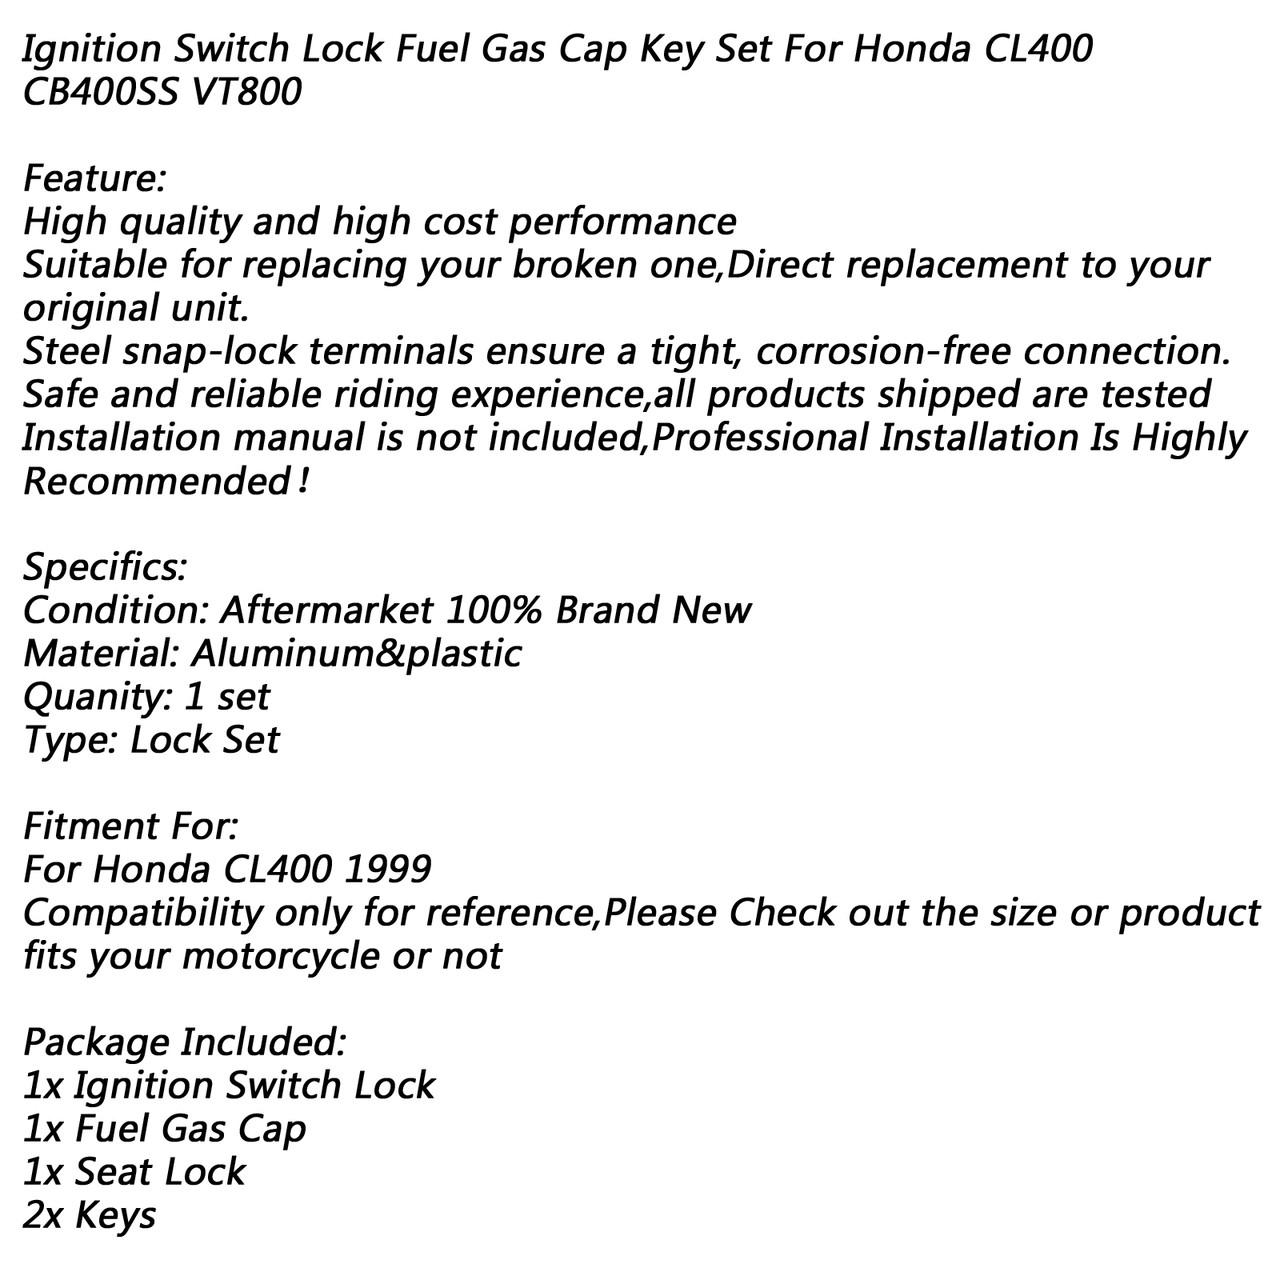 Ignition Switch Lock Fuel Gas Cap Seat Helmet Lock Keys Kit for Honda CL400 1999